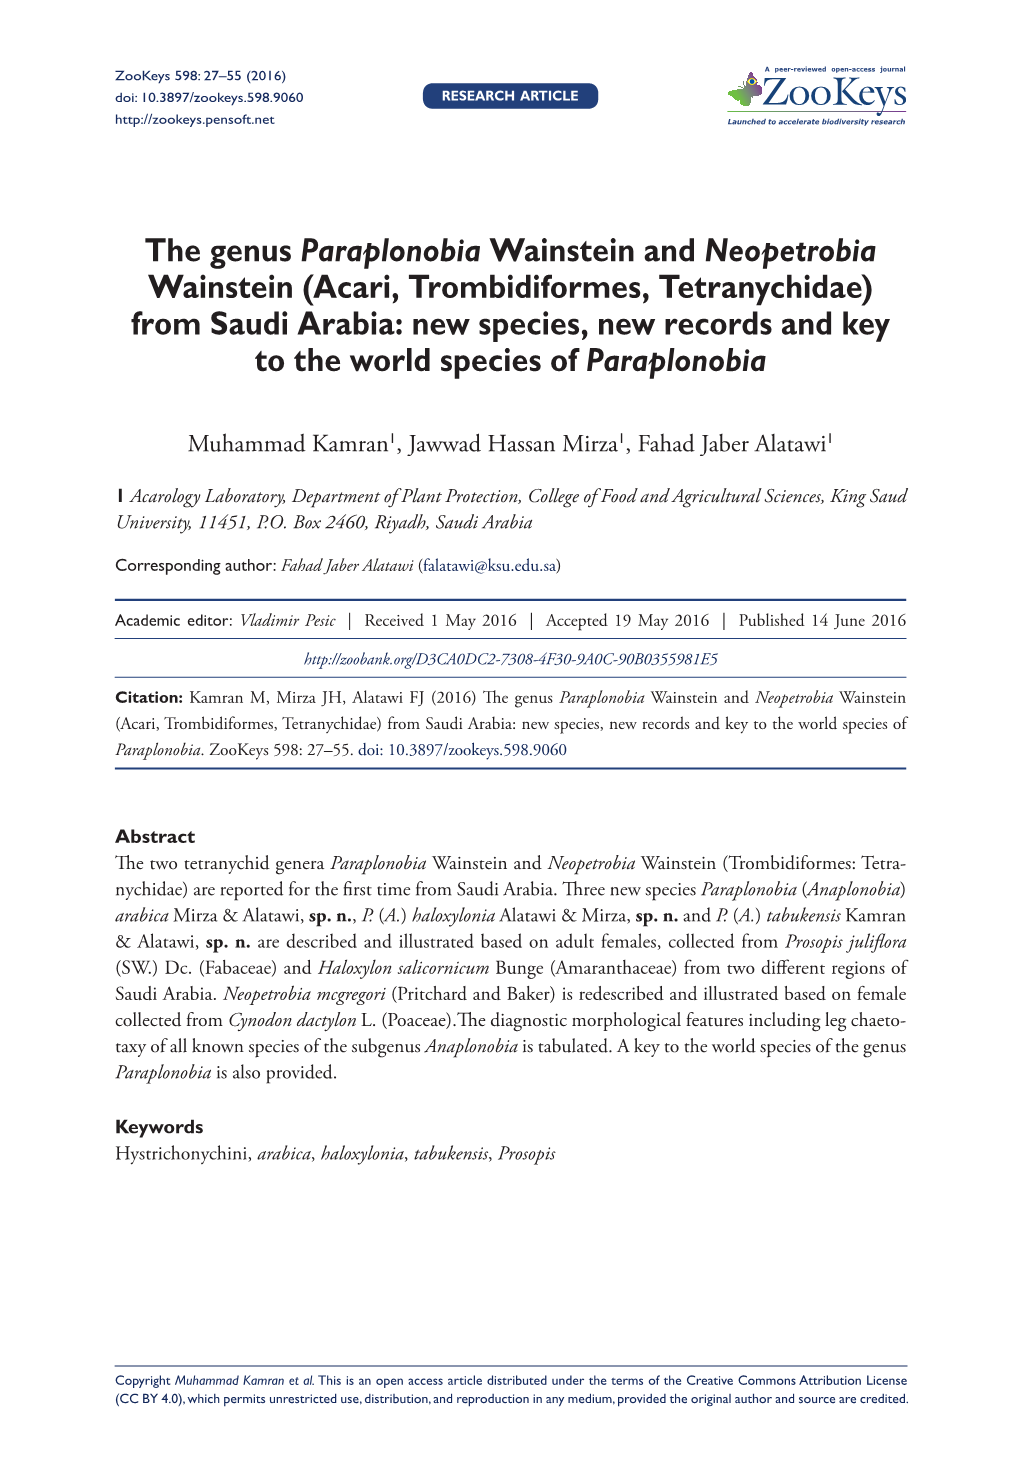 Acari, Trombidiformes, Tetranychidae) from Saudi Arabia: New Species, New Records and Key to the World Species of Paraplonobia